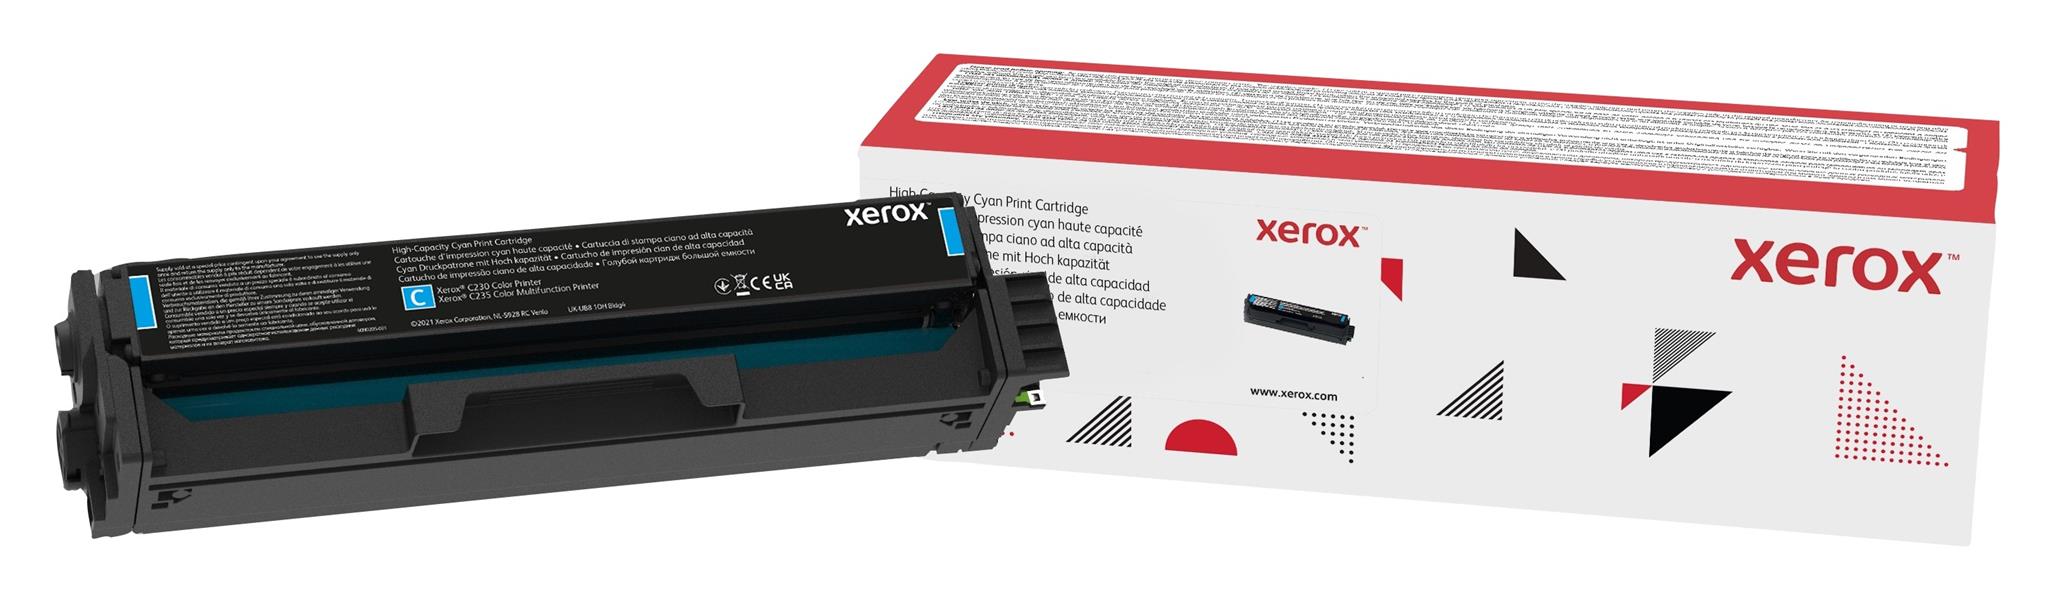 Xerox C230/C235 hoge capaciteit tonercassette, cyaan (2.500 paginas)